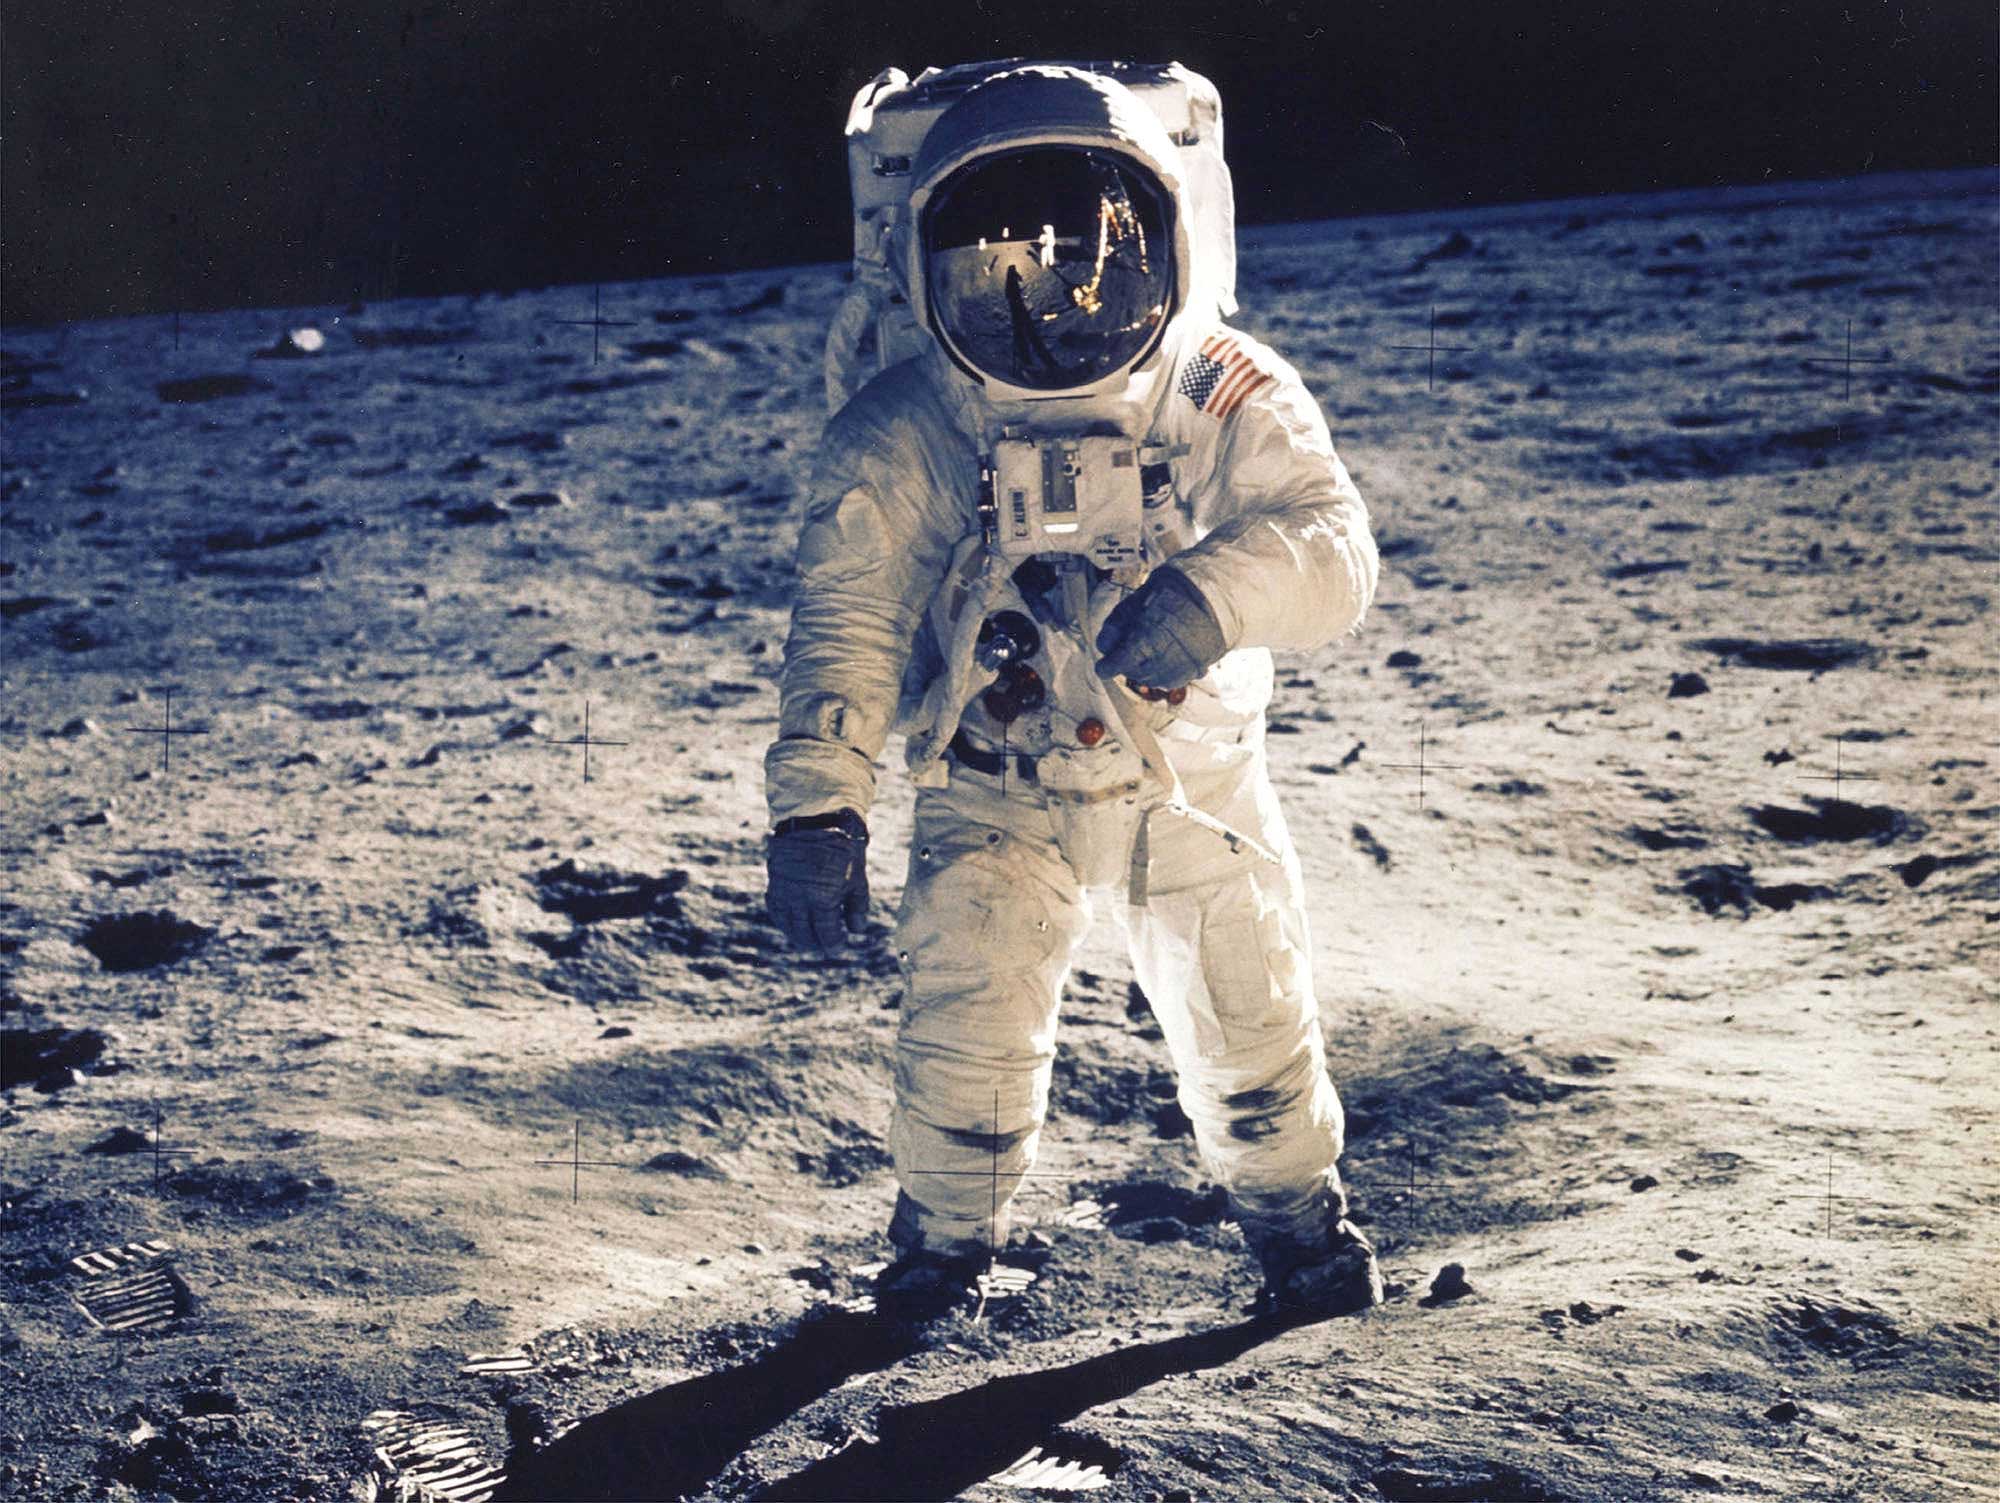 NASA astronaut walking on the moon